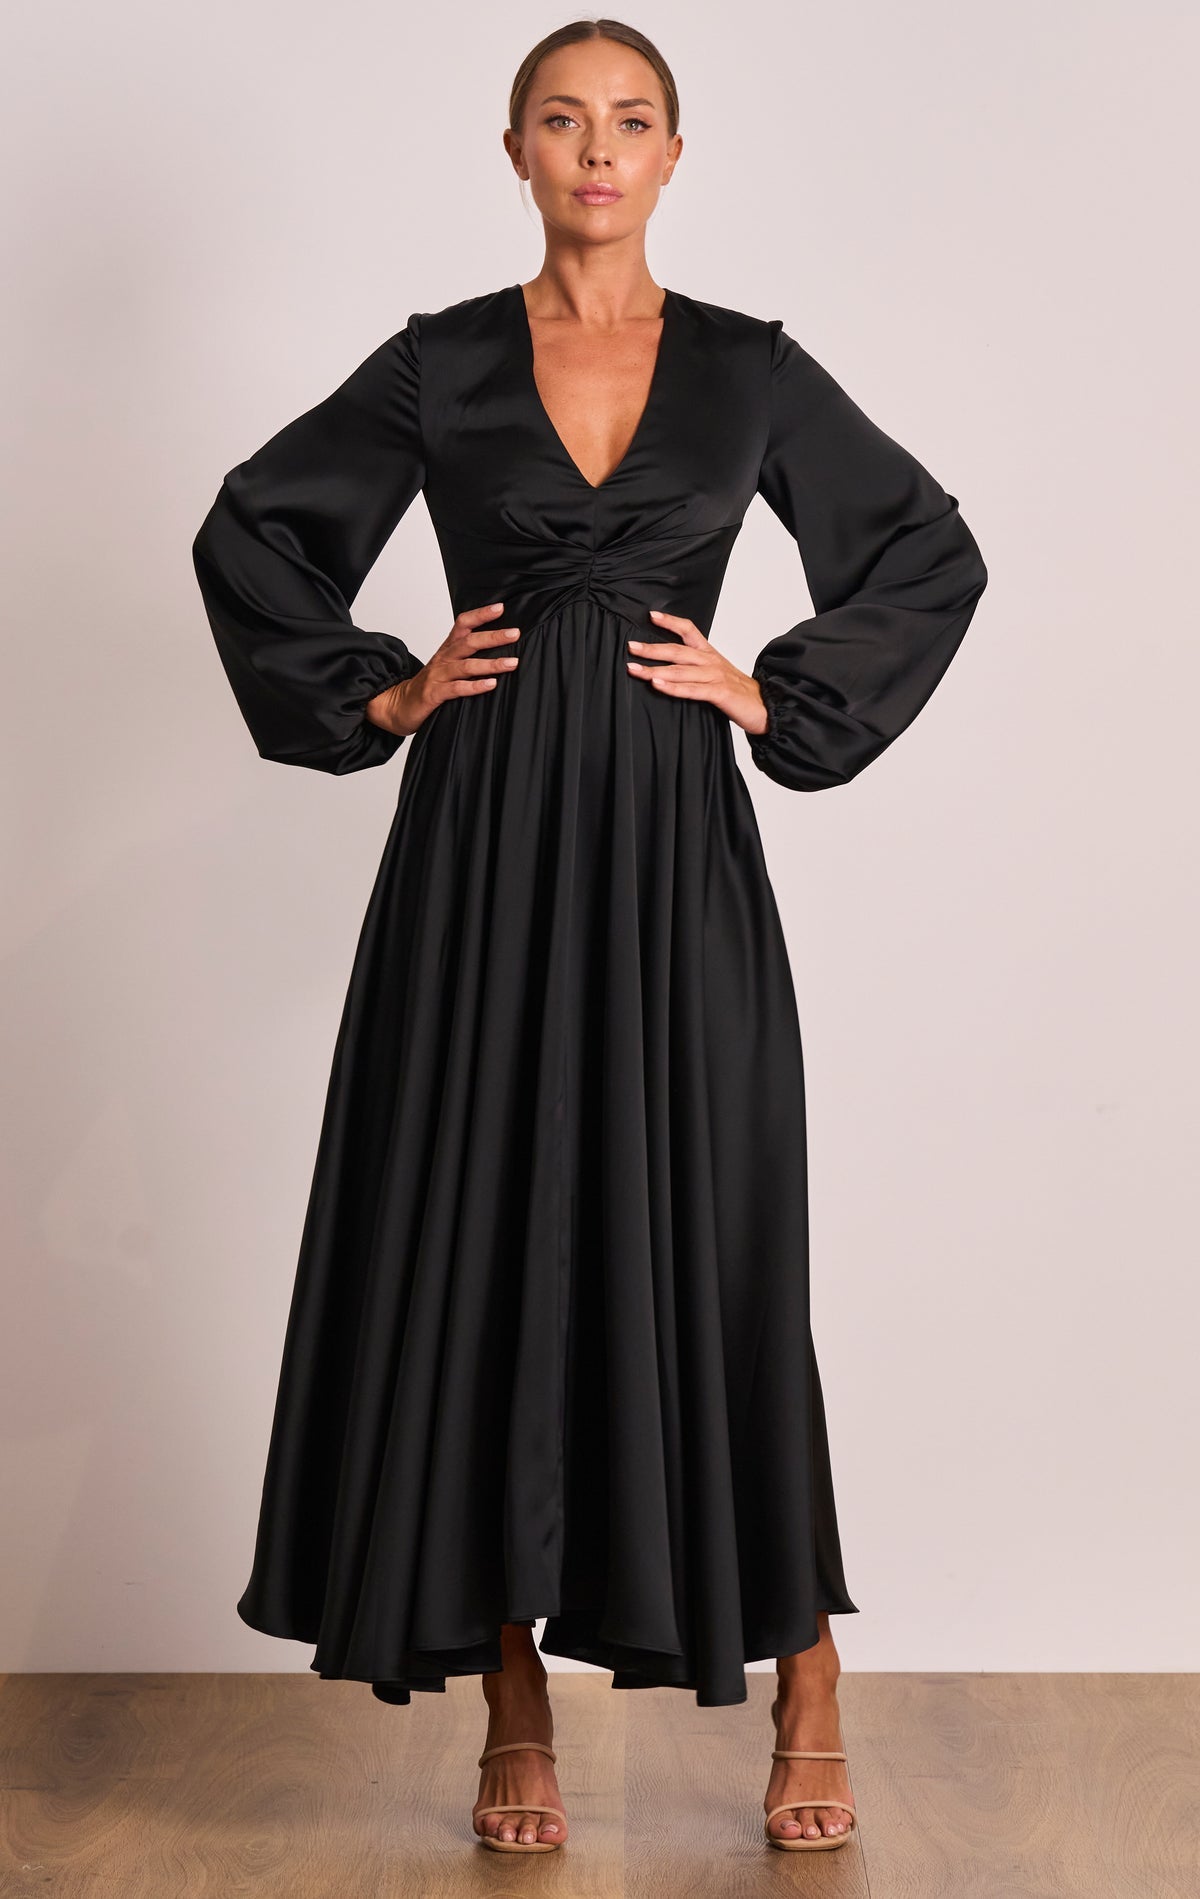 Pasduchas PASDUCHAS Lucia Sleeve Midi Dress (Black) - RRP $380 - PD101265_Black_1_1200x_caf4e39b-2728-441f-9fd3-b941a45c0472.jpg